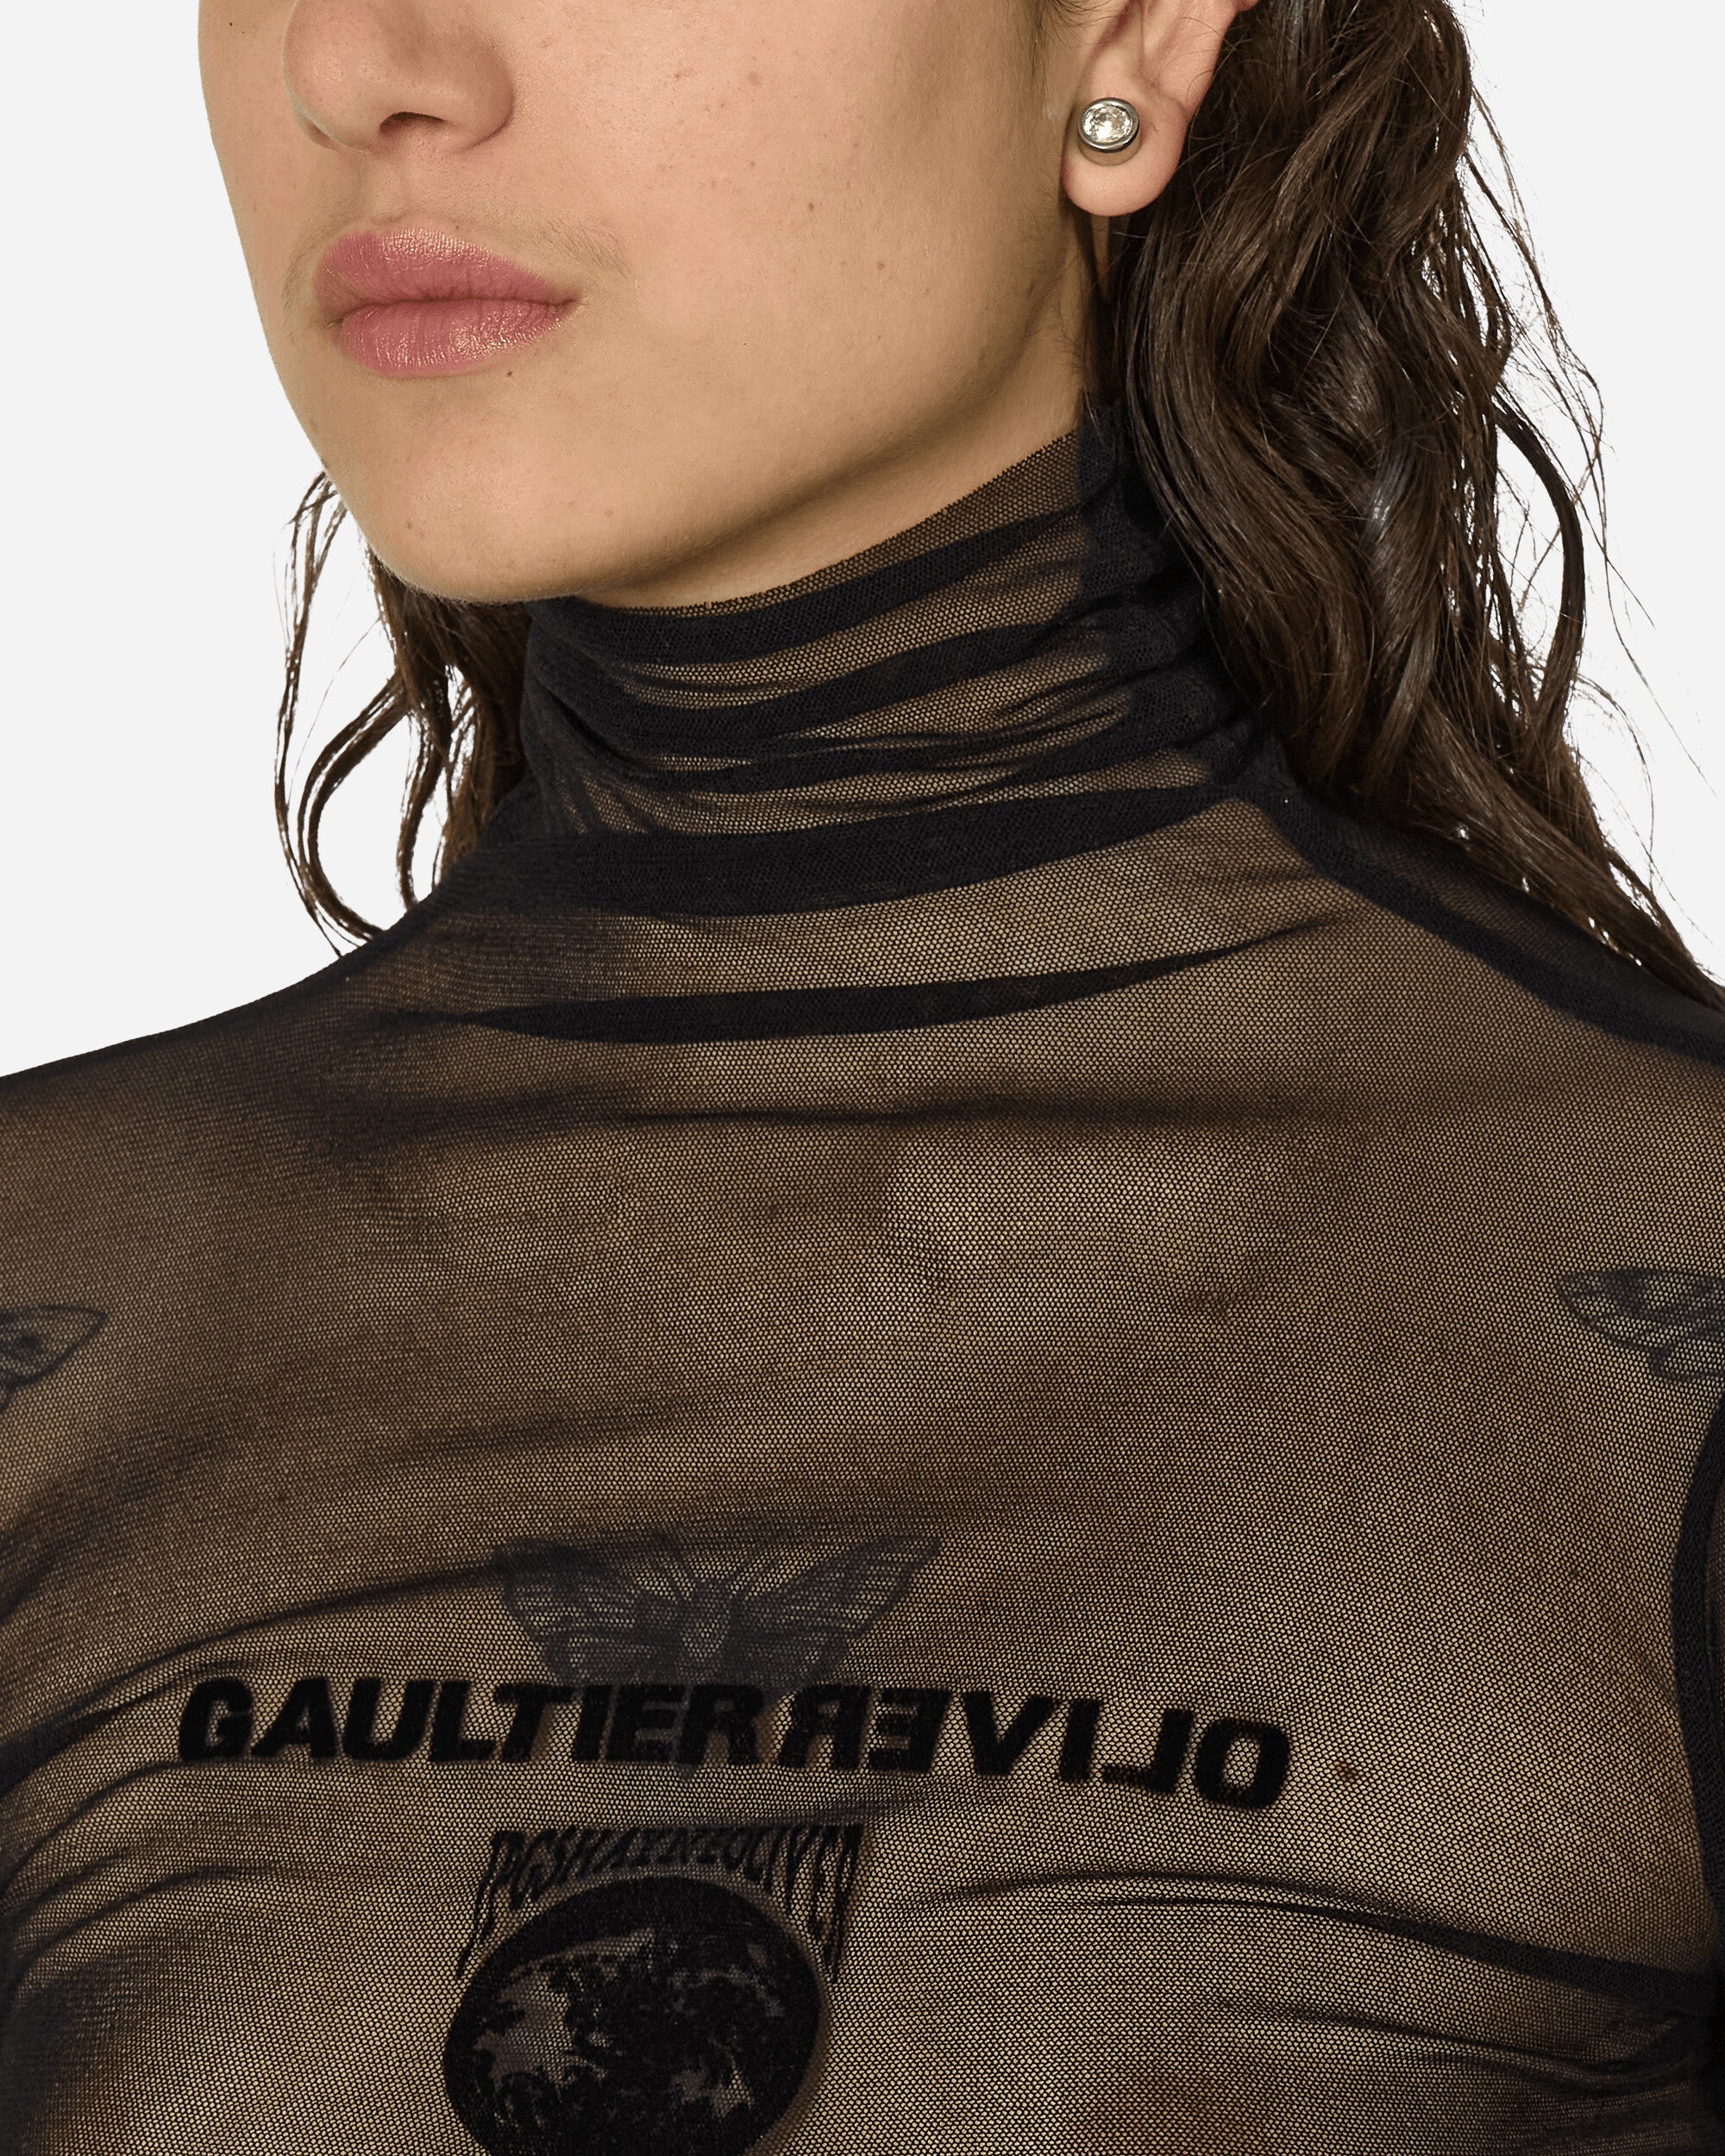 Jean Paul Gaultier Wmns Mesh Turtle Neck Flocked Earth Black T-Shirts Longsleeve TO187I-T001 0000